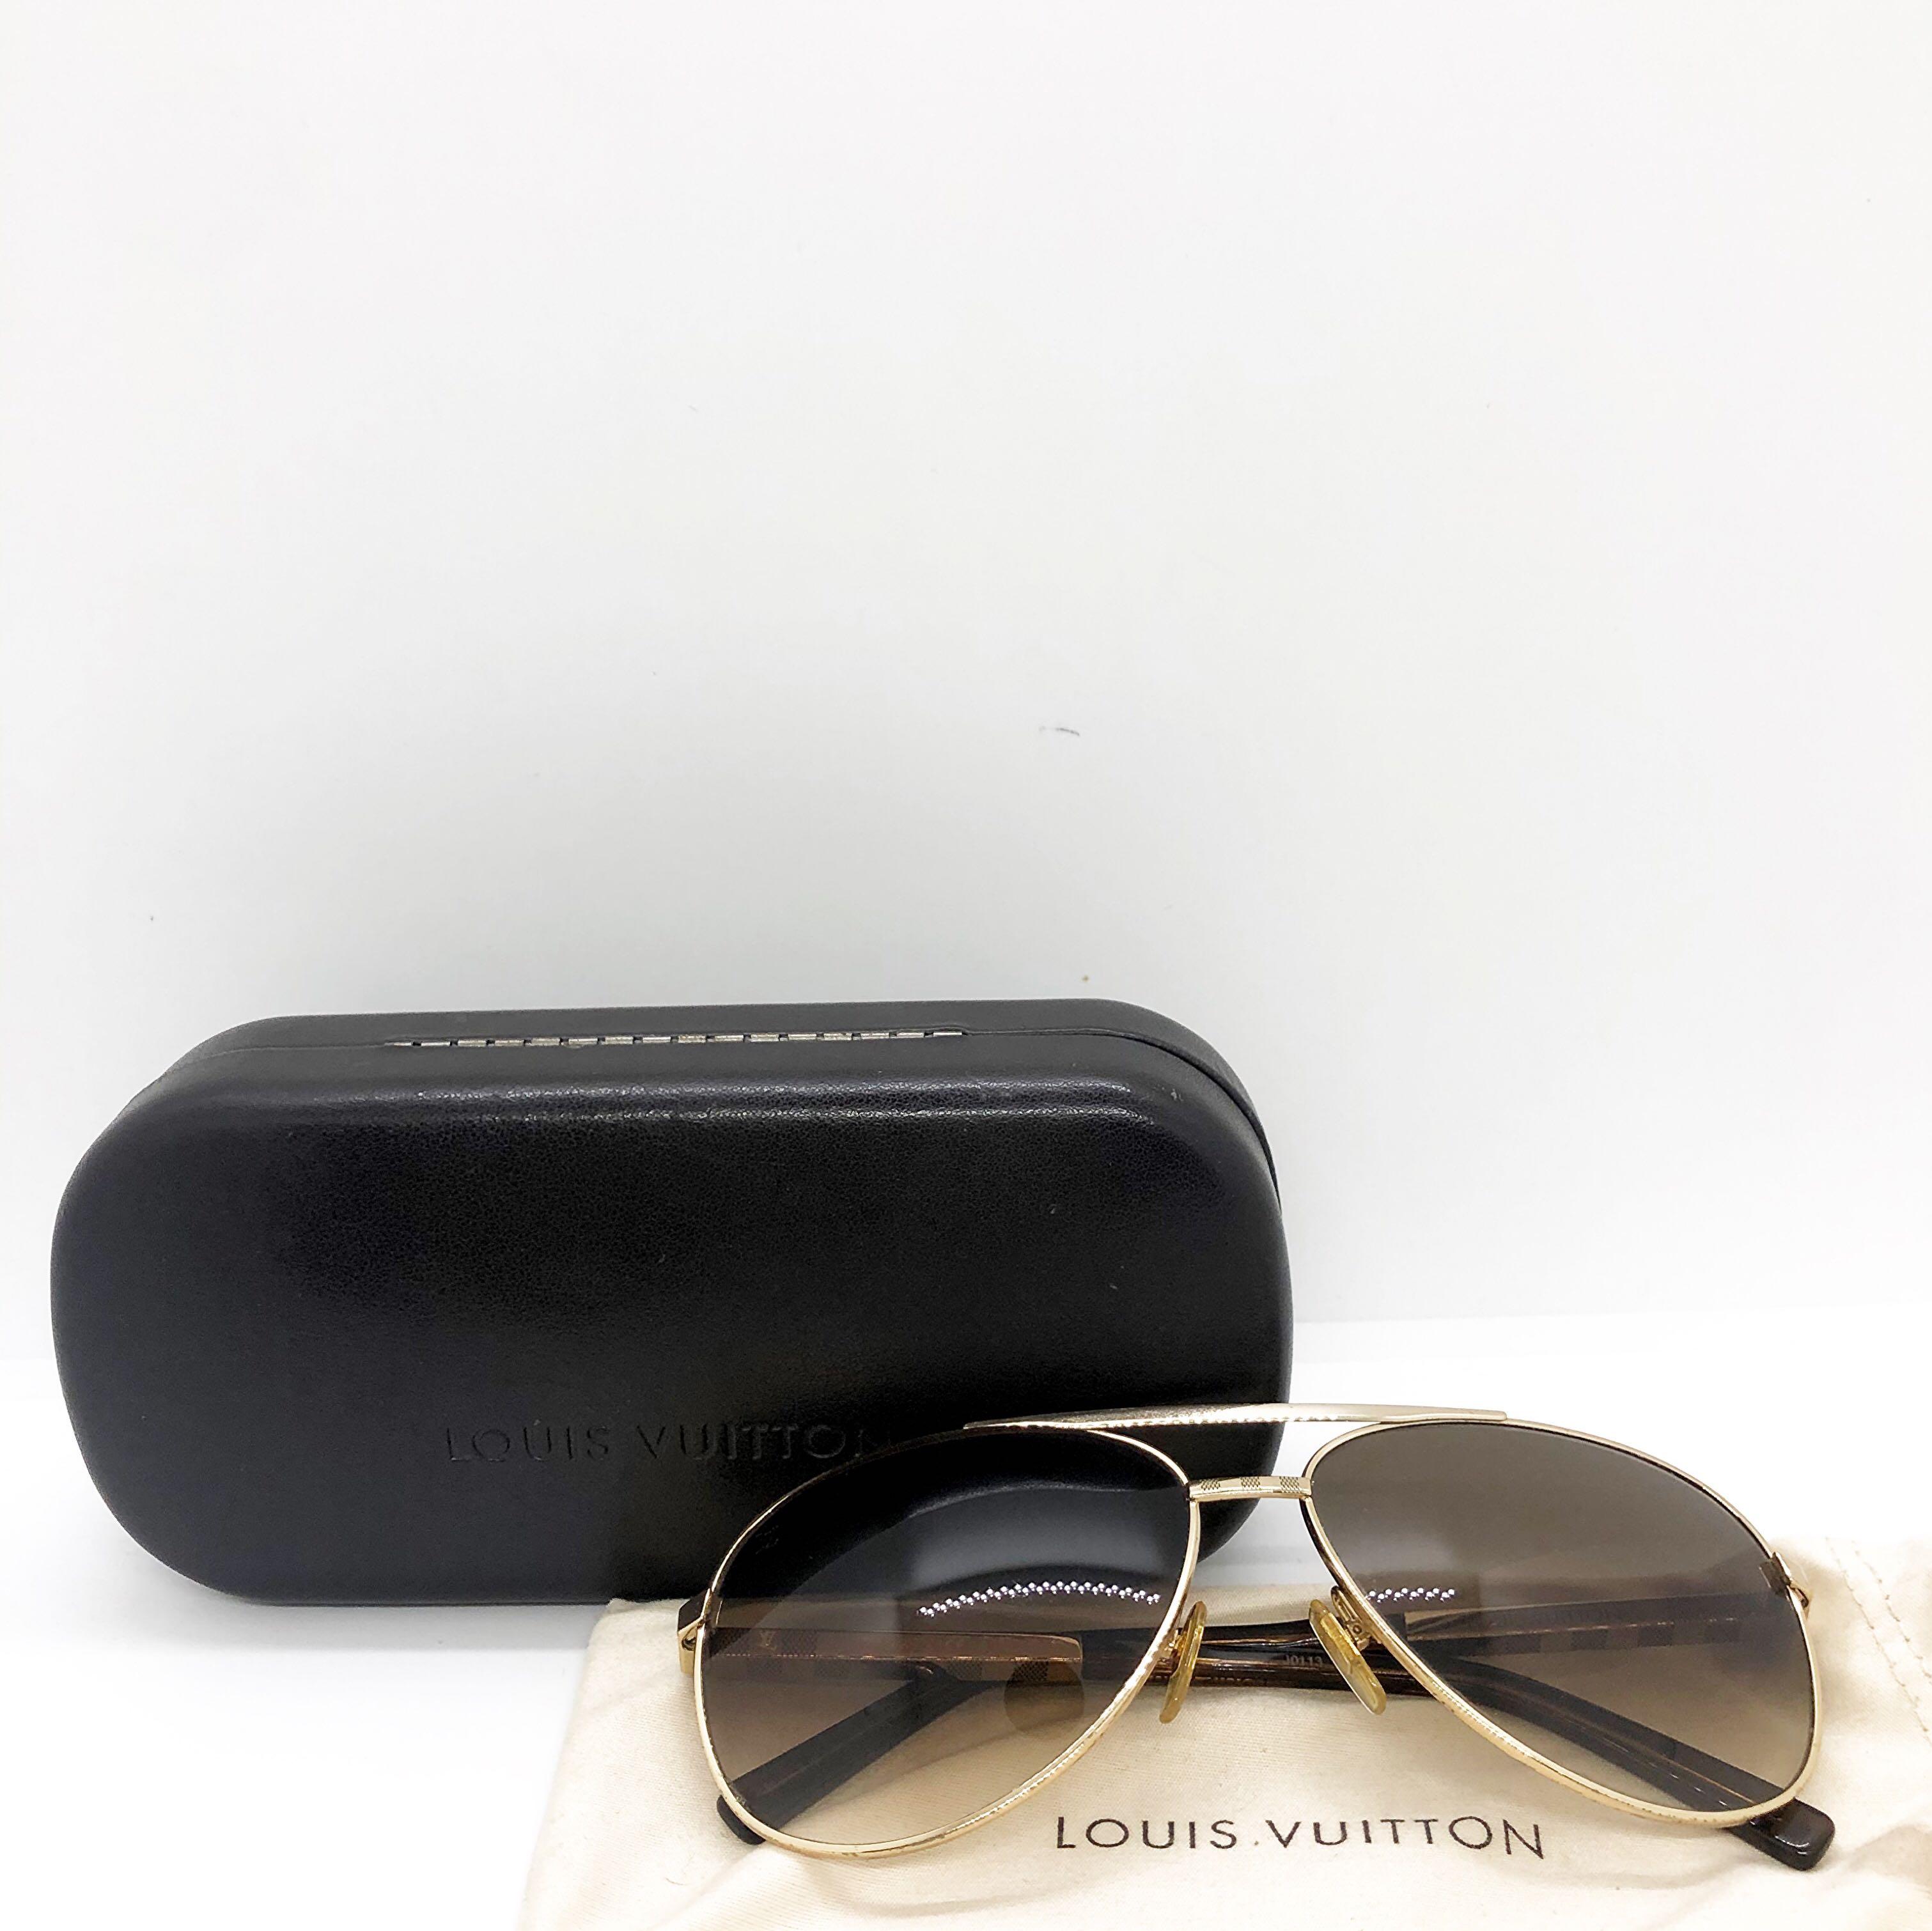 Louis Vuitton Attitude Pilote sunglasses